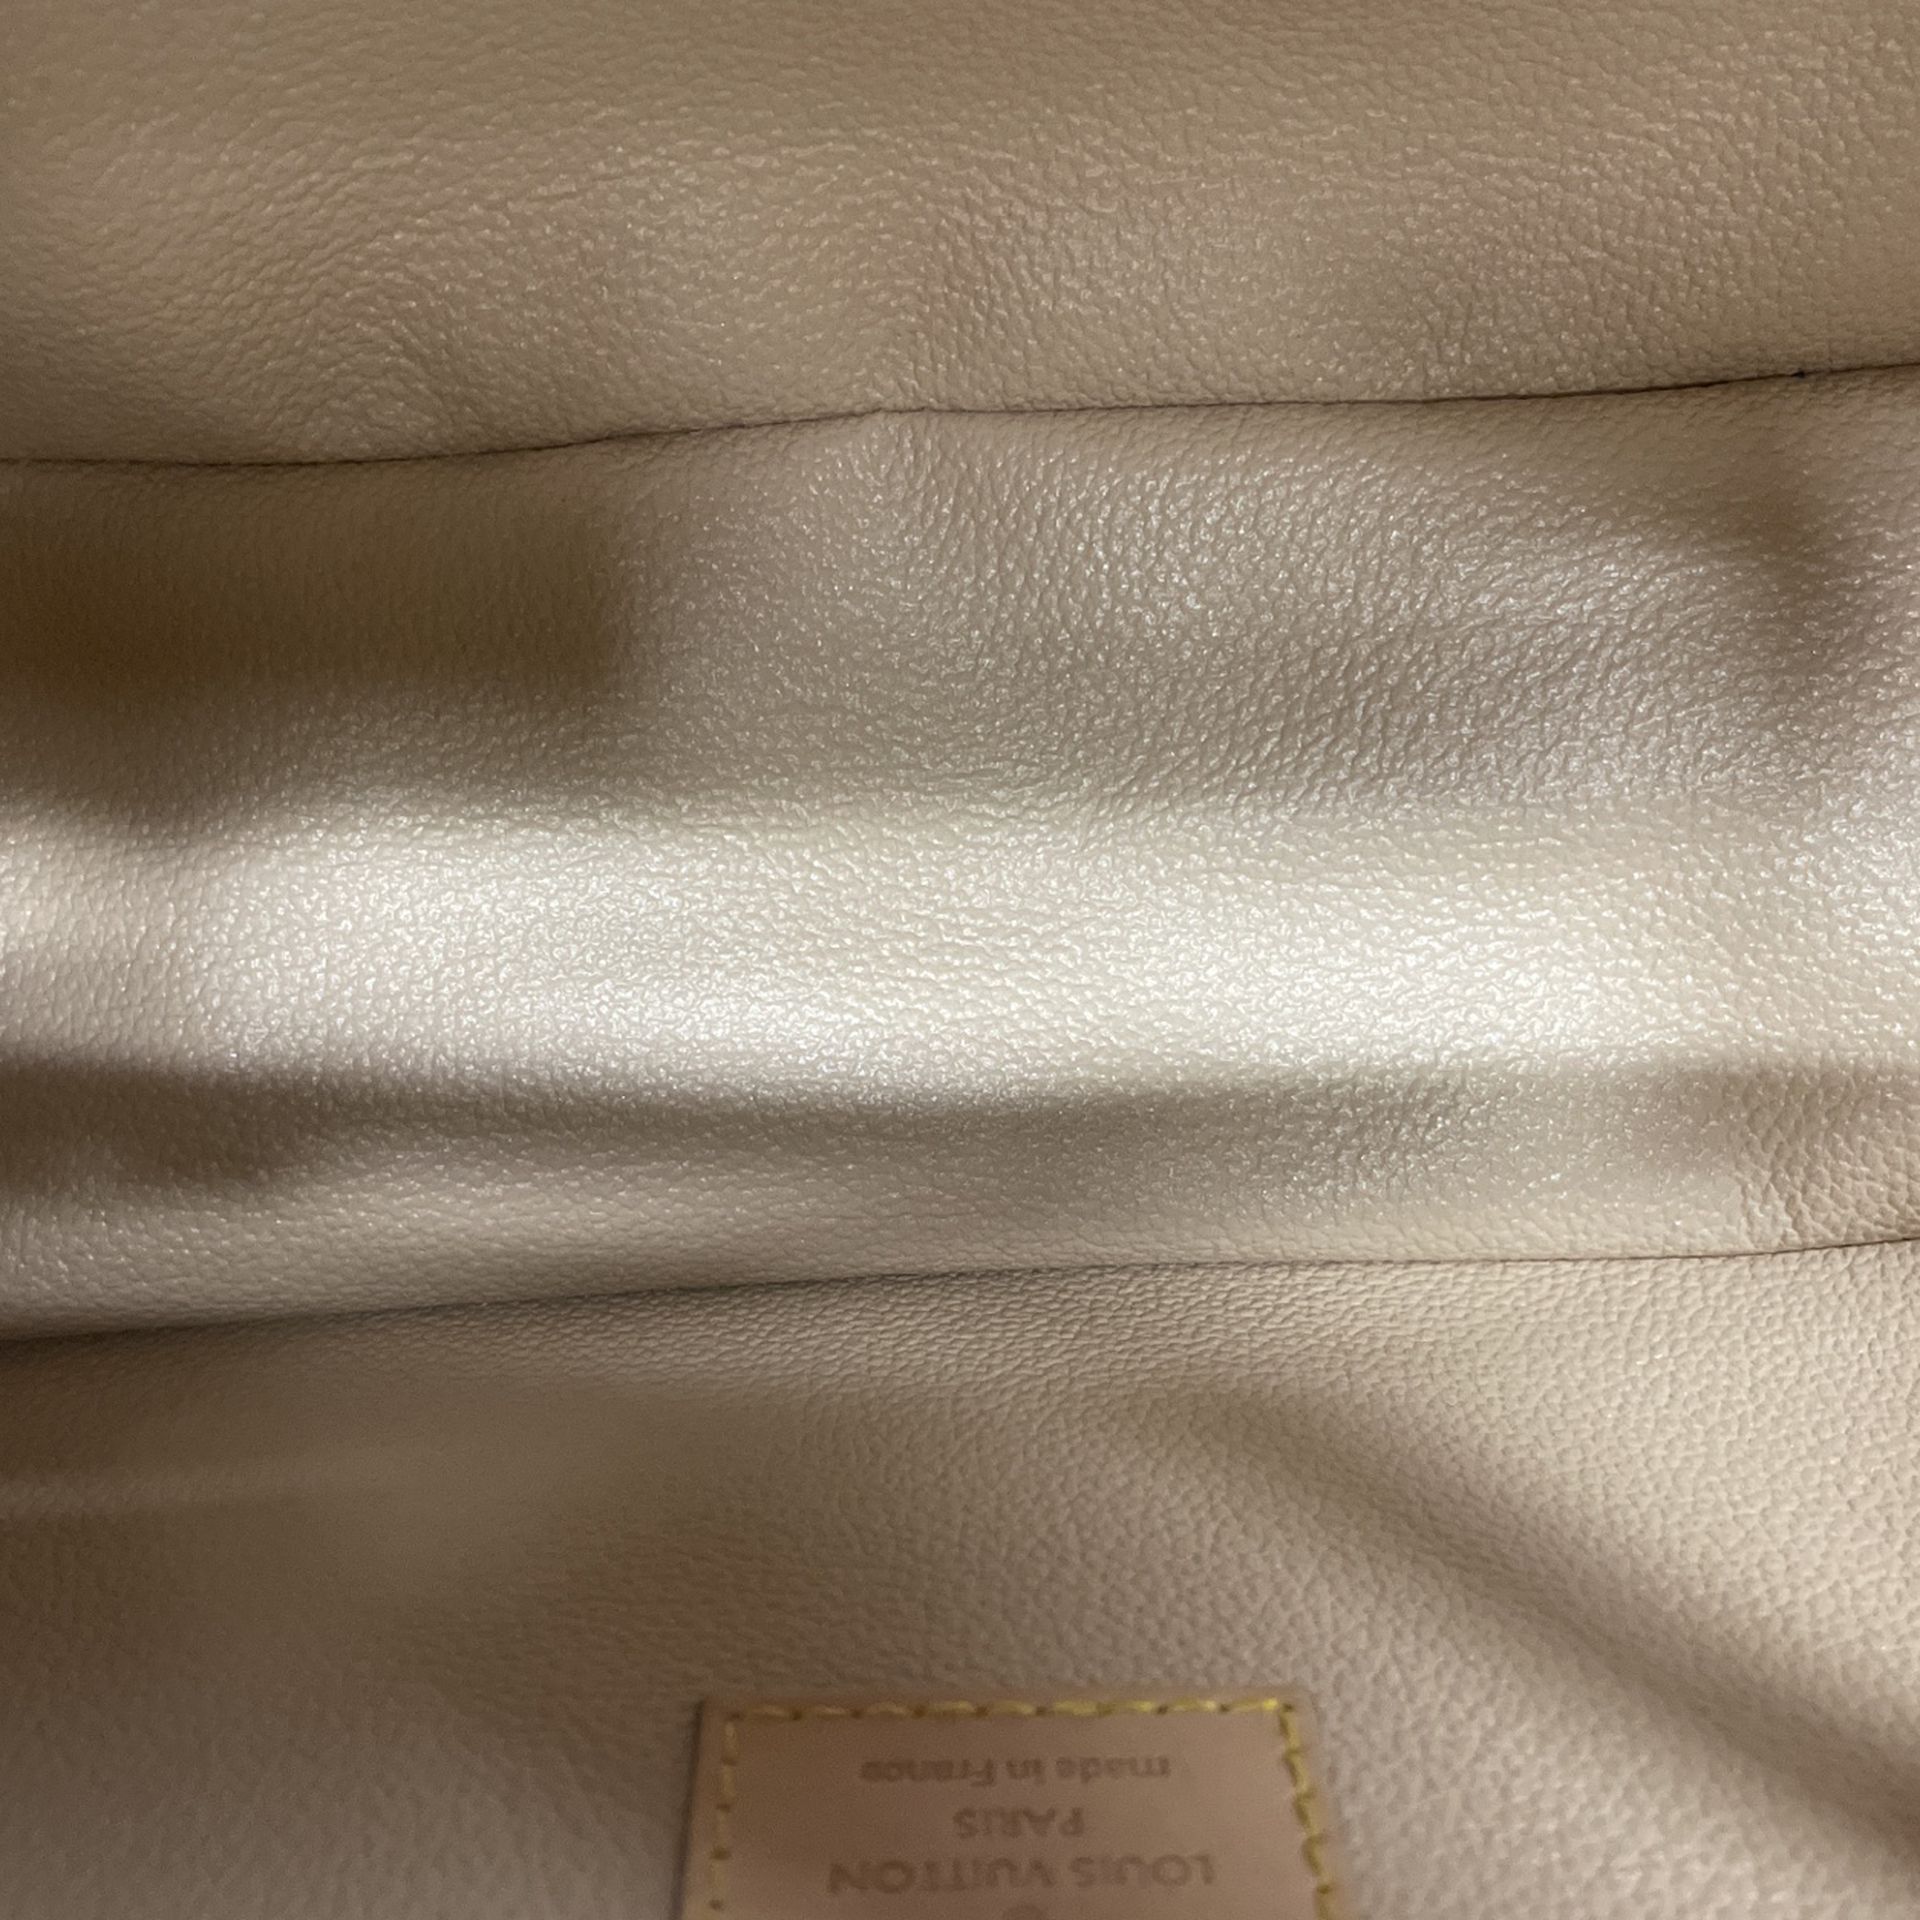 Louis Vuitton Lisa MakeUp Bag — So Loretta